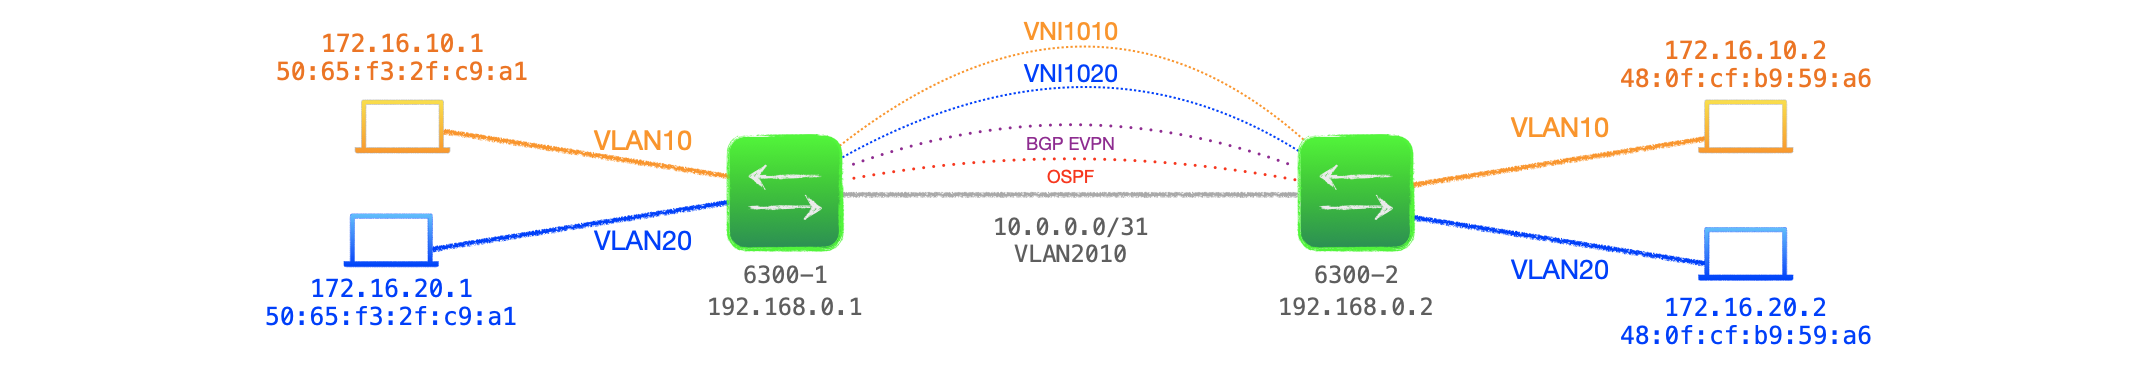 EVPN-VXLAN Explainer 3 -        BGP UPDATE & Route Type 2